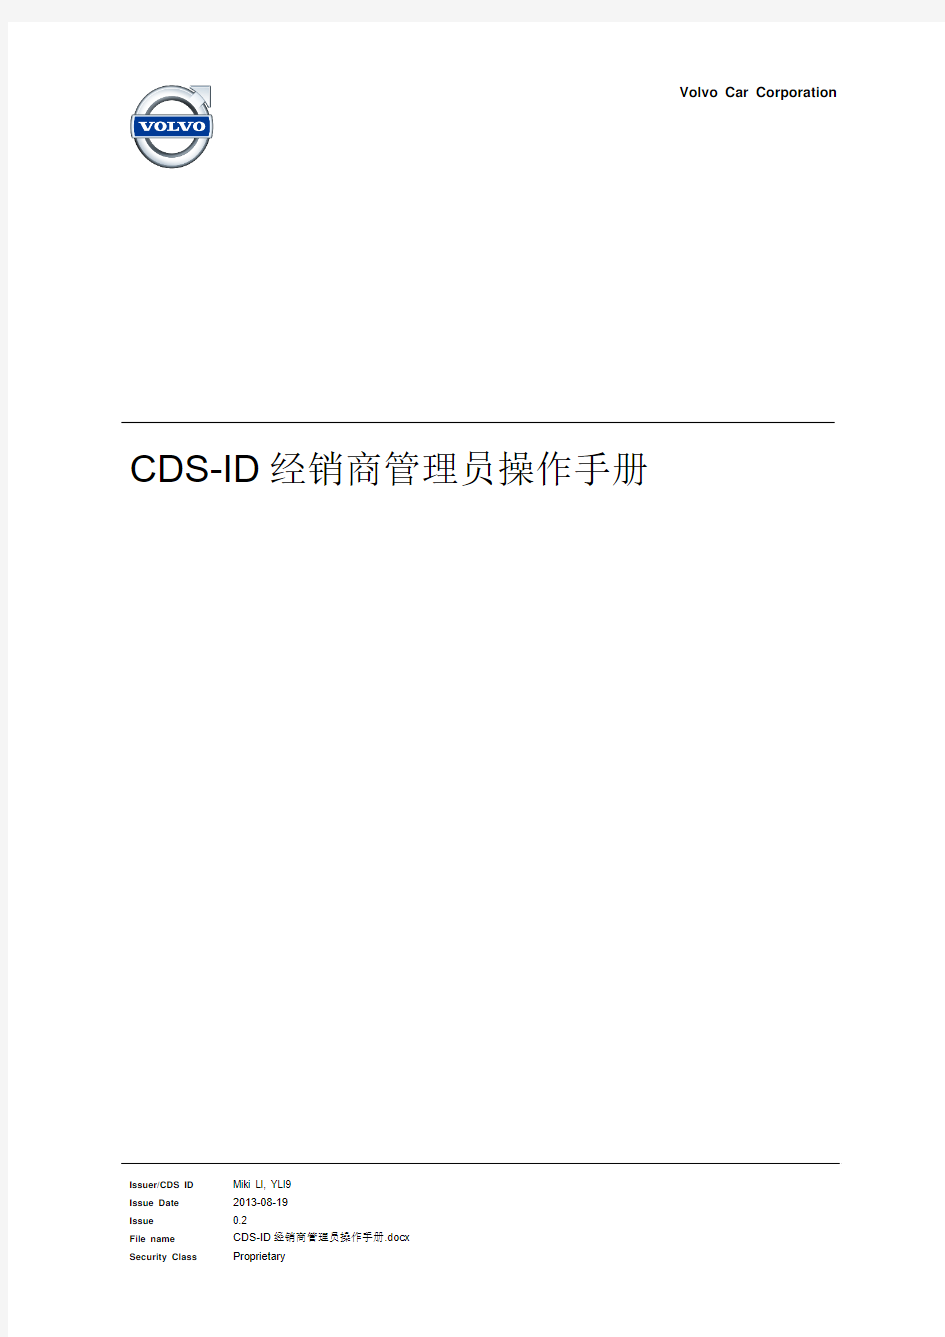 CDSID经销商管理员操作手册